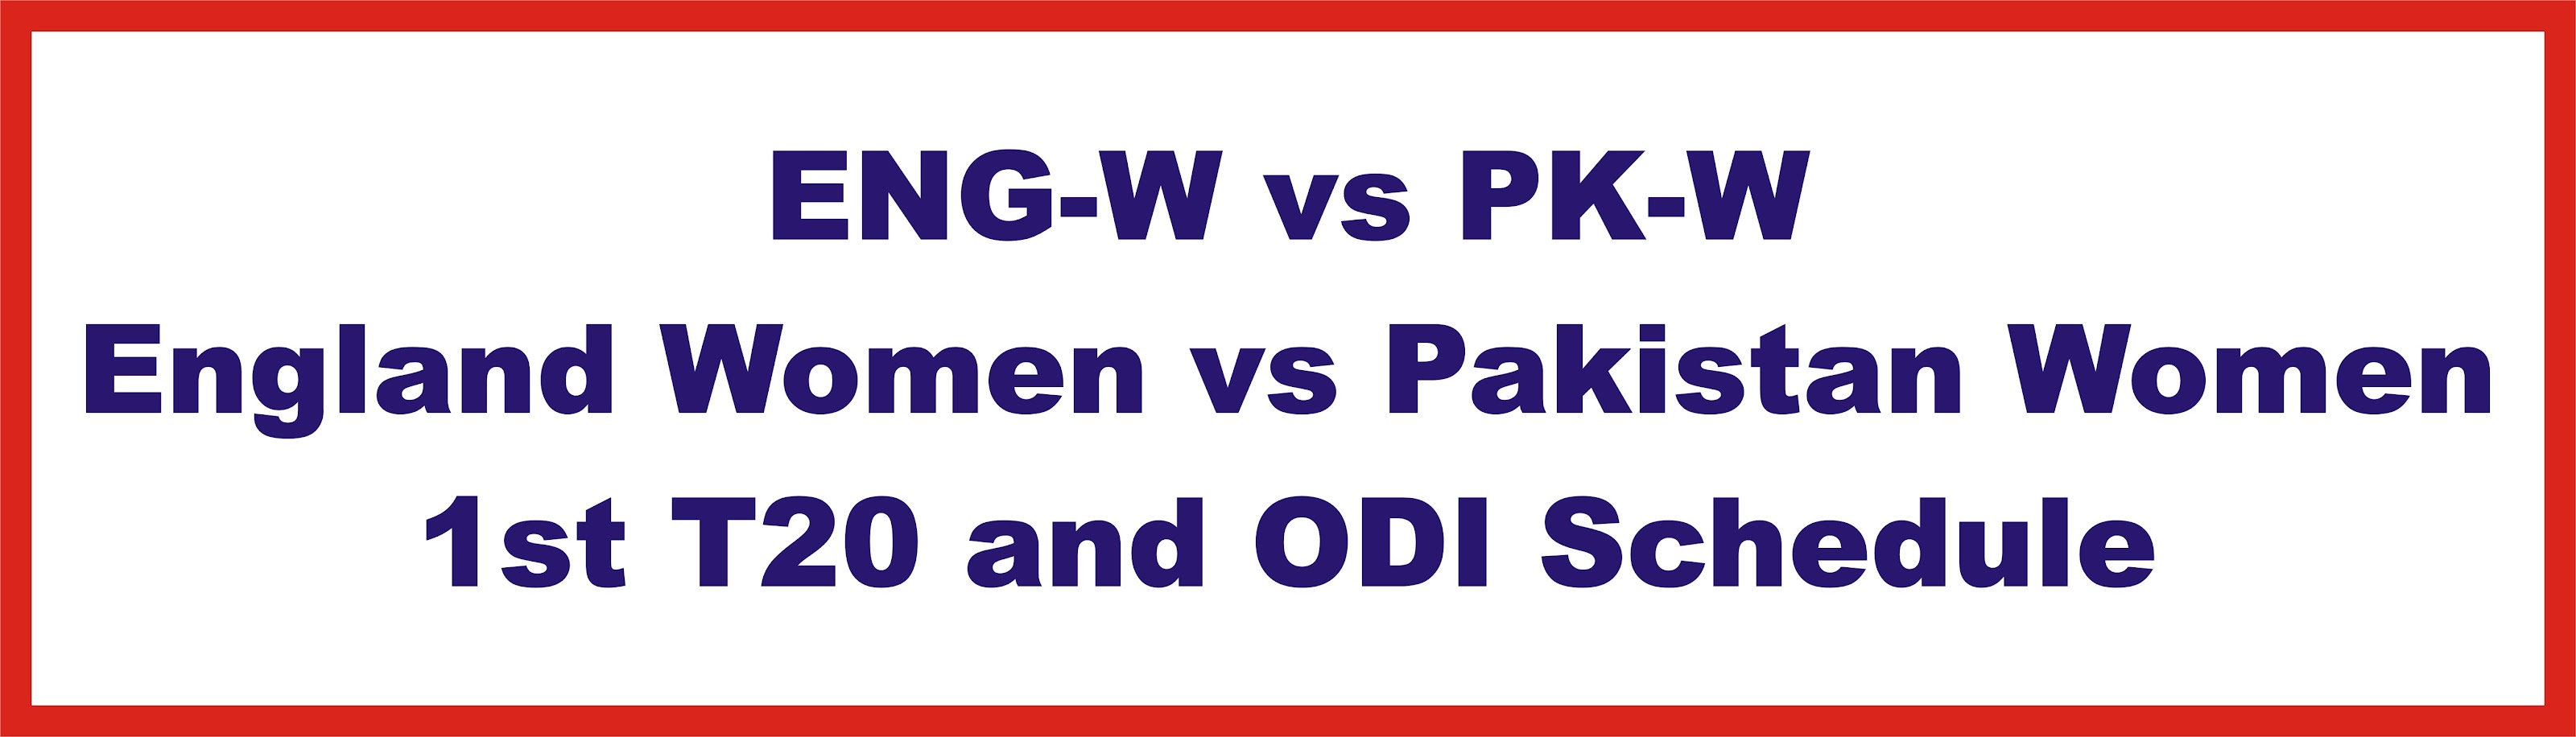 ENG-W vs PK-W | England Women vs Pakistan Women 1st T20 and ODI Schedule